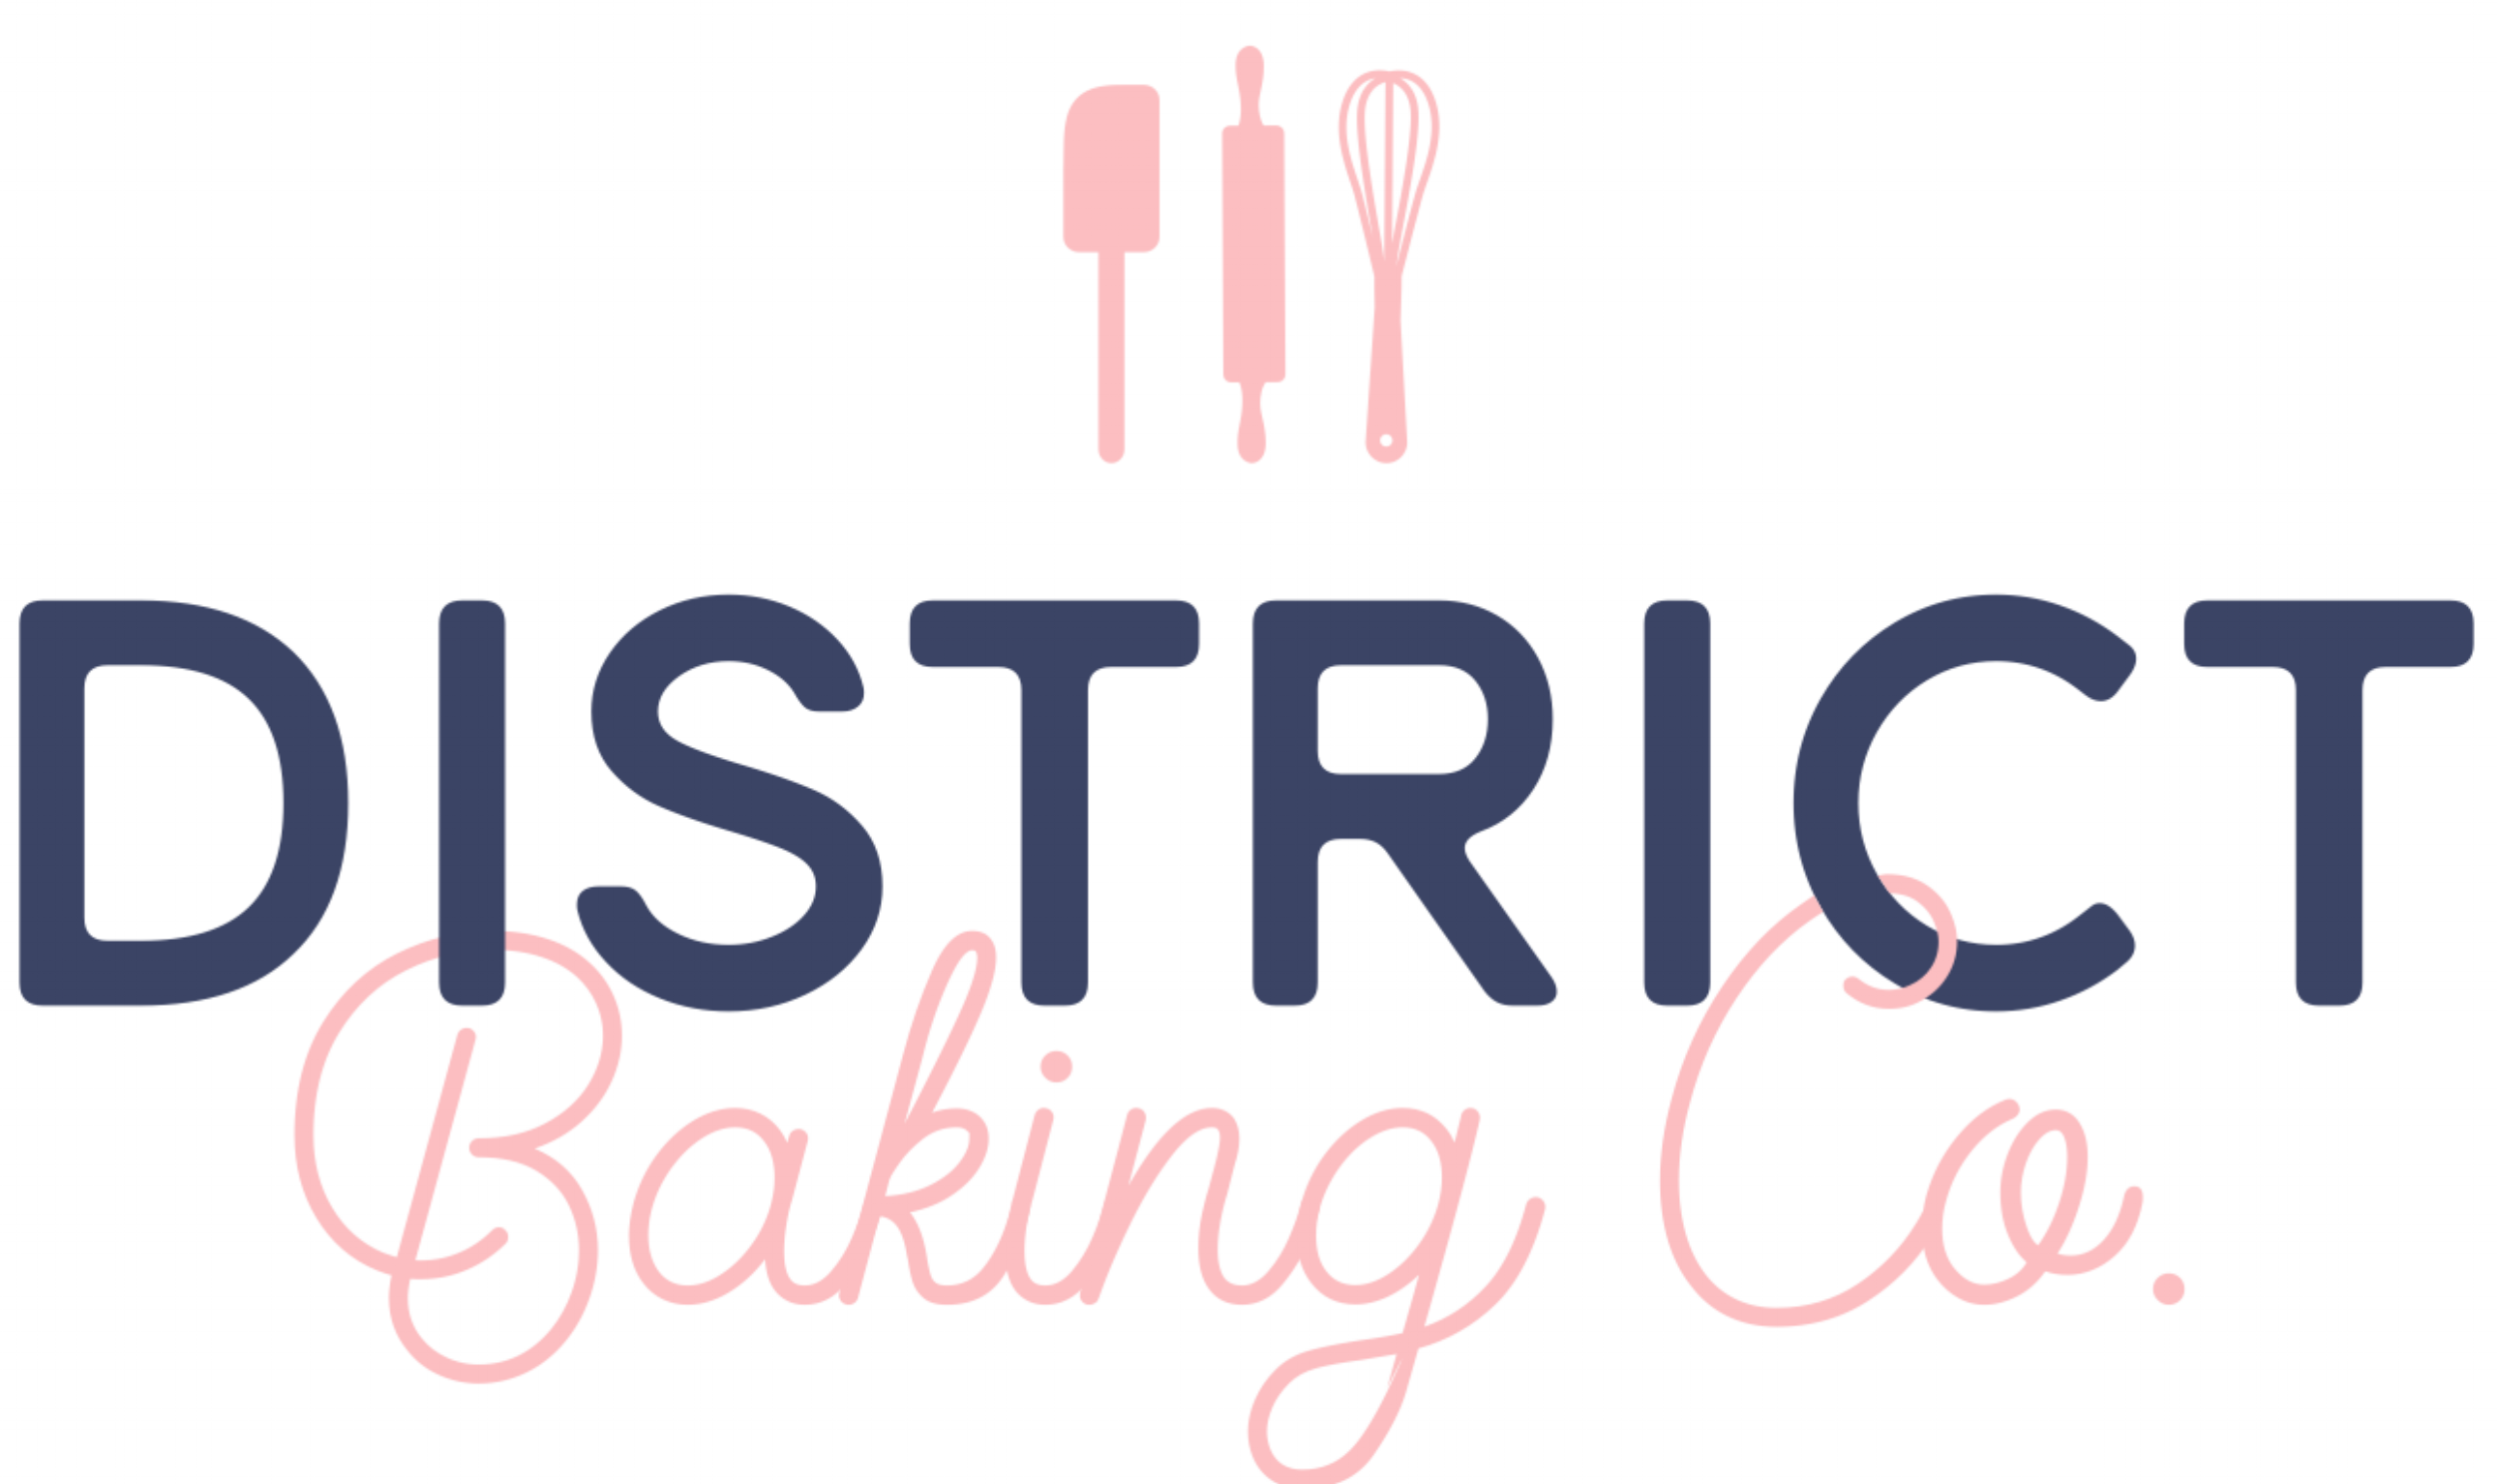 District Baking Co.